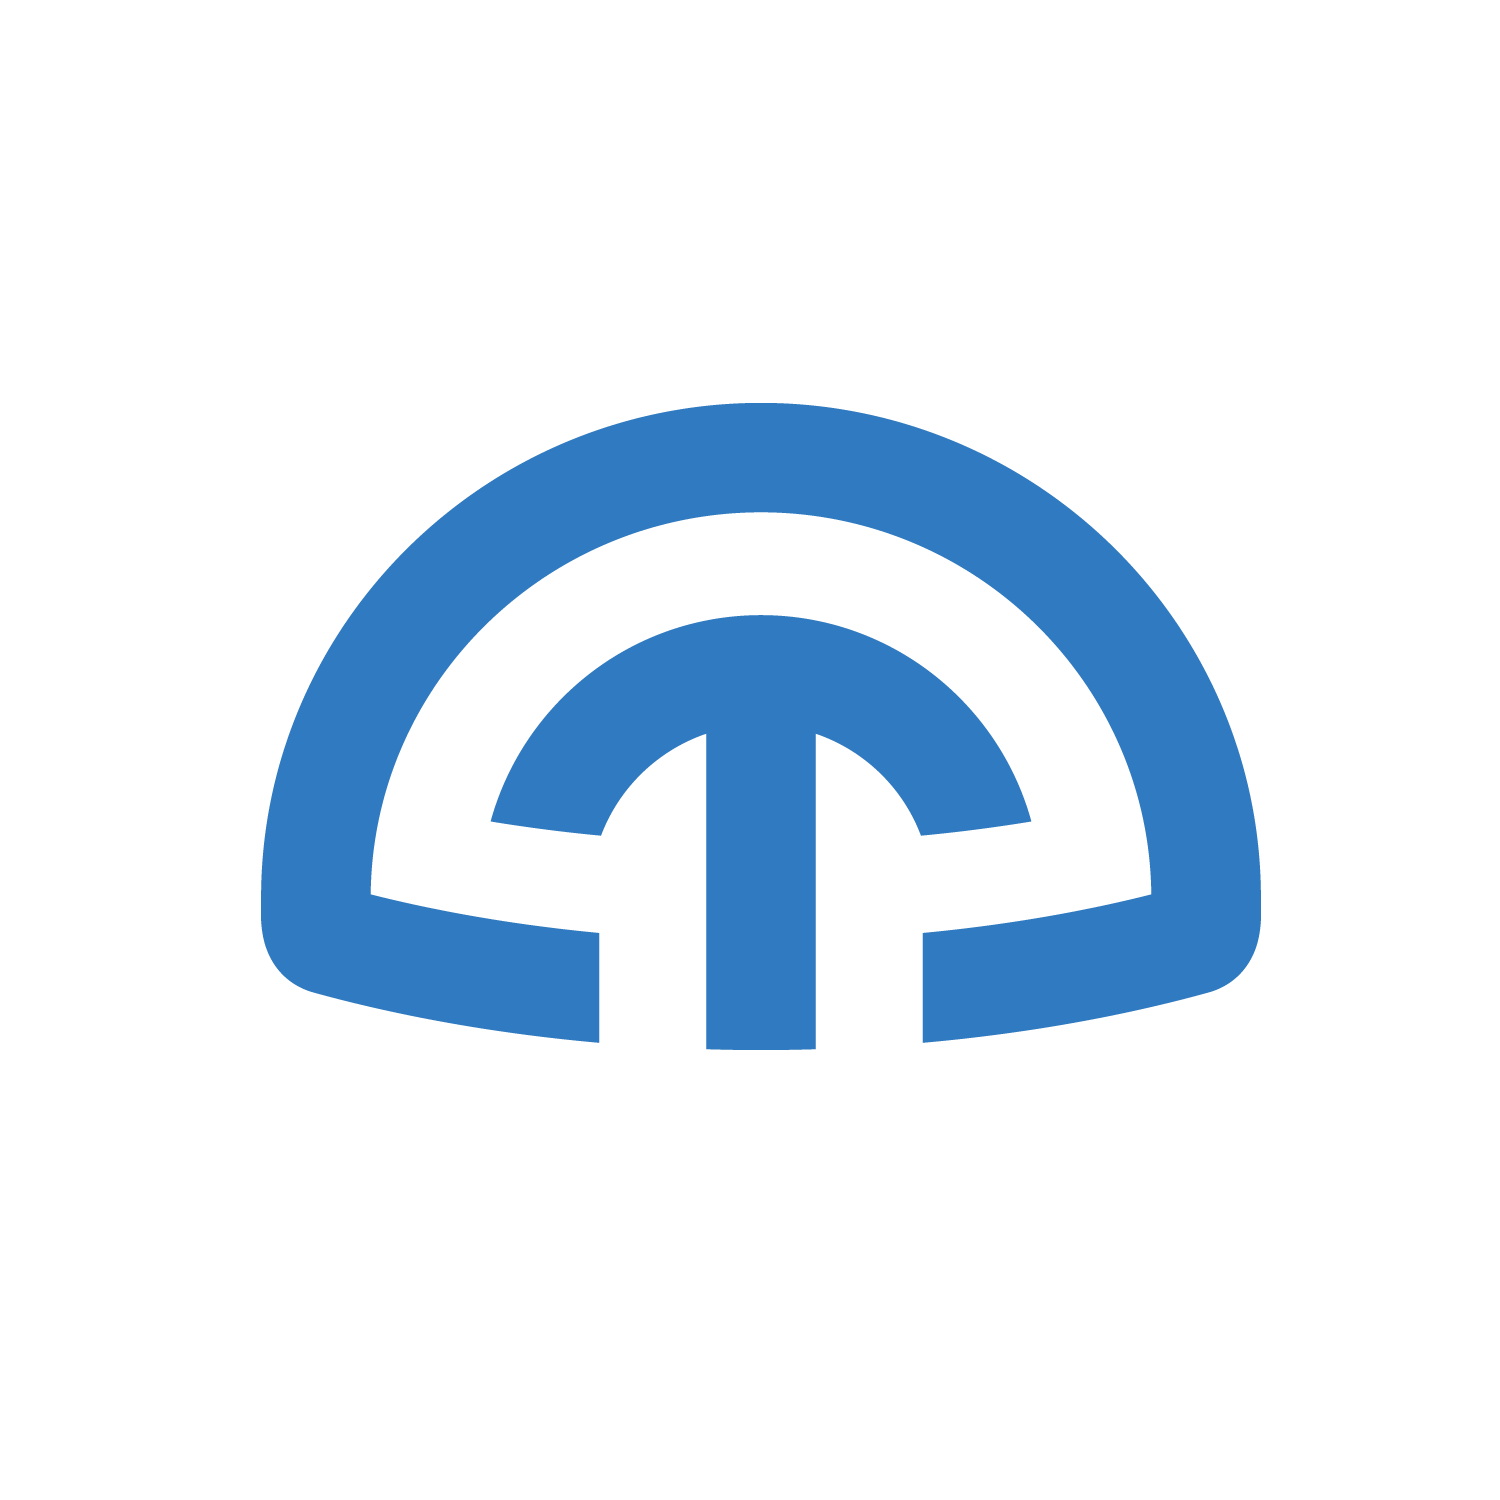 Logo TestDome